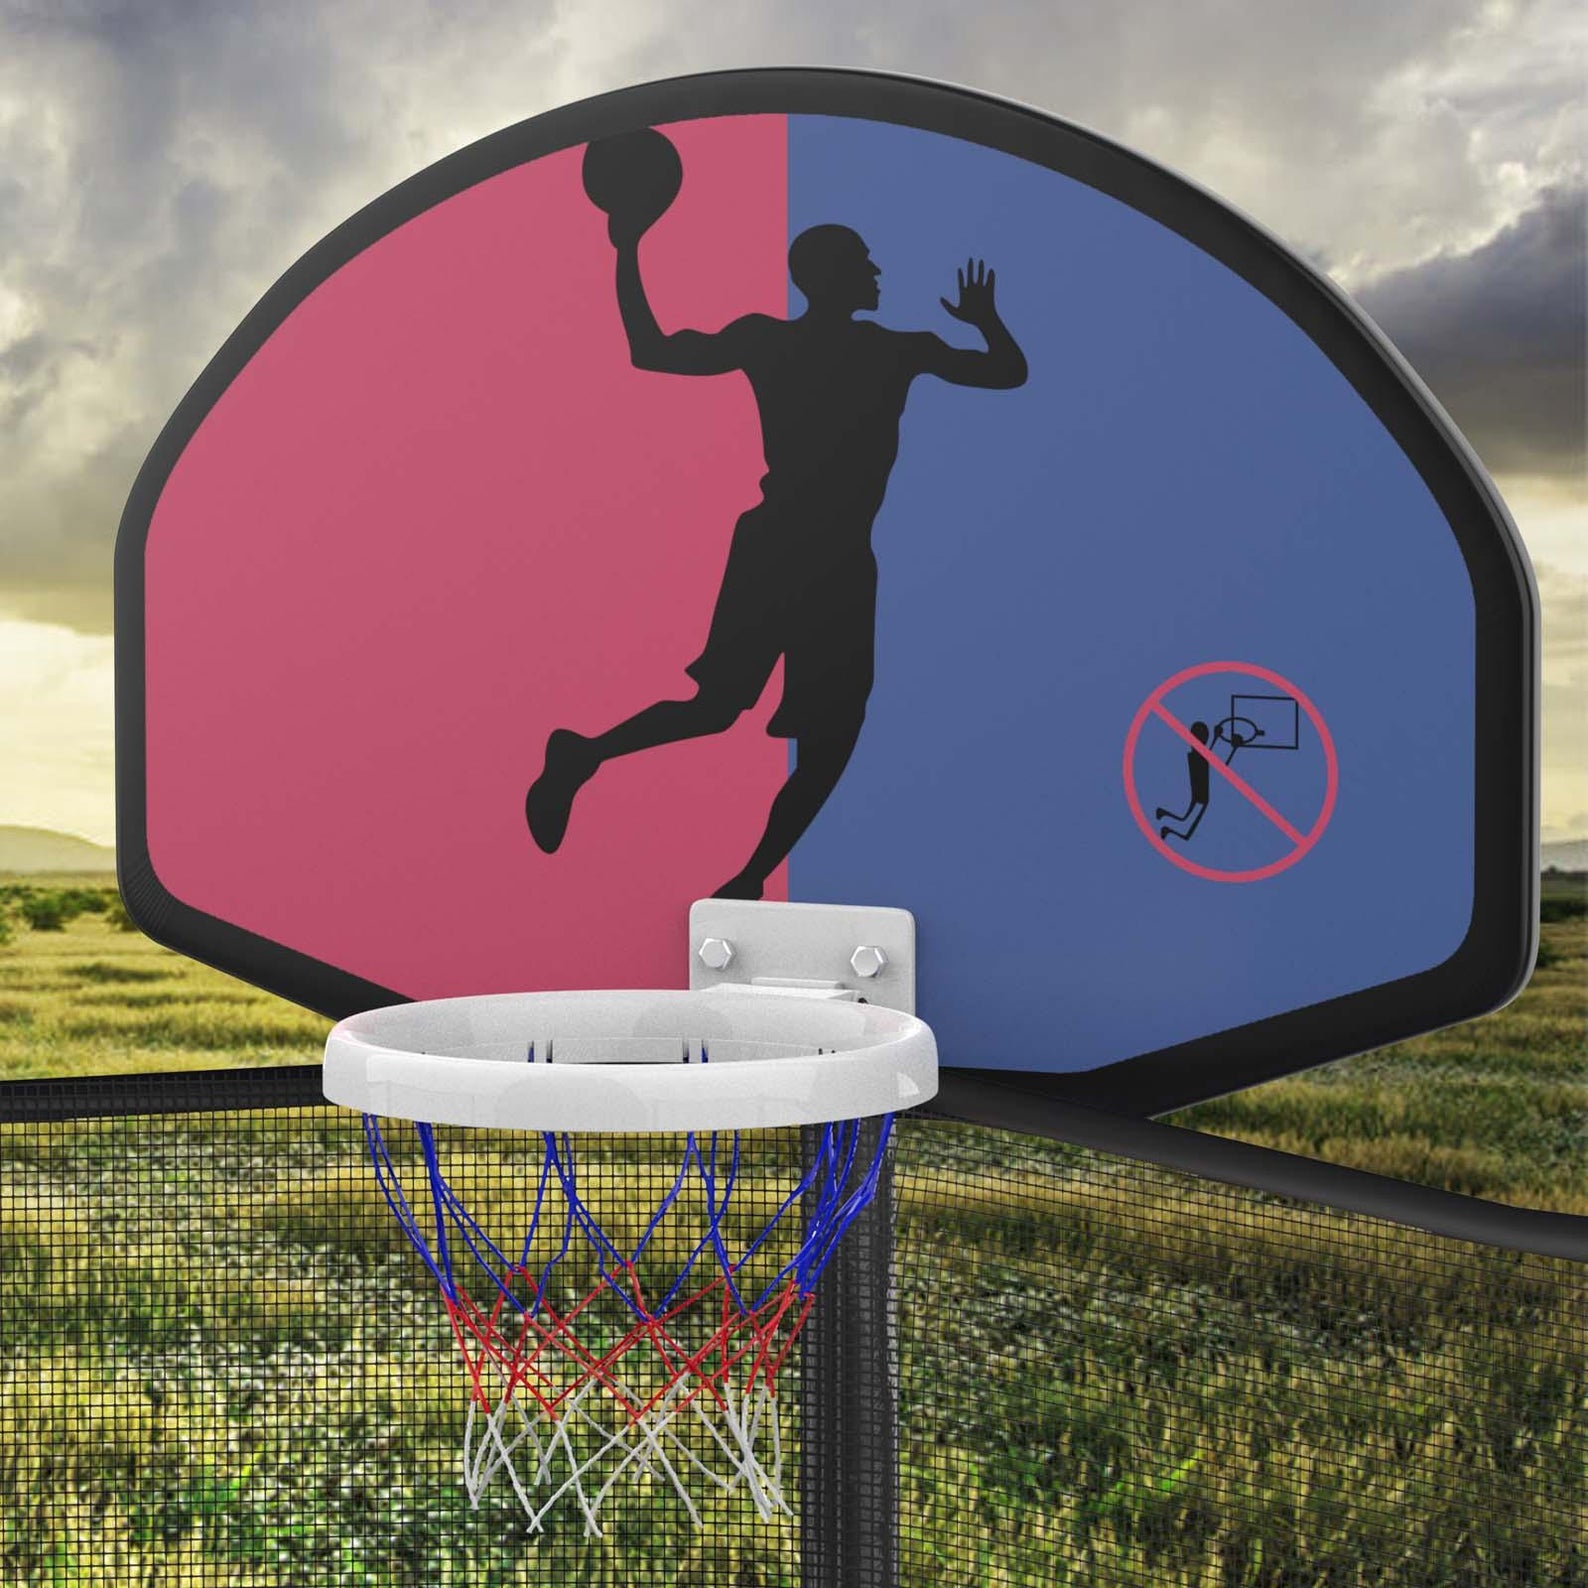 Trampoline Basketball Hoop - Aotob